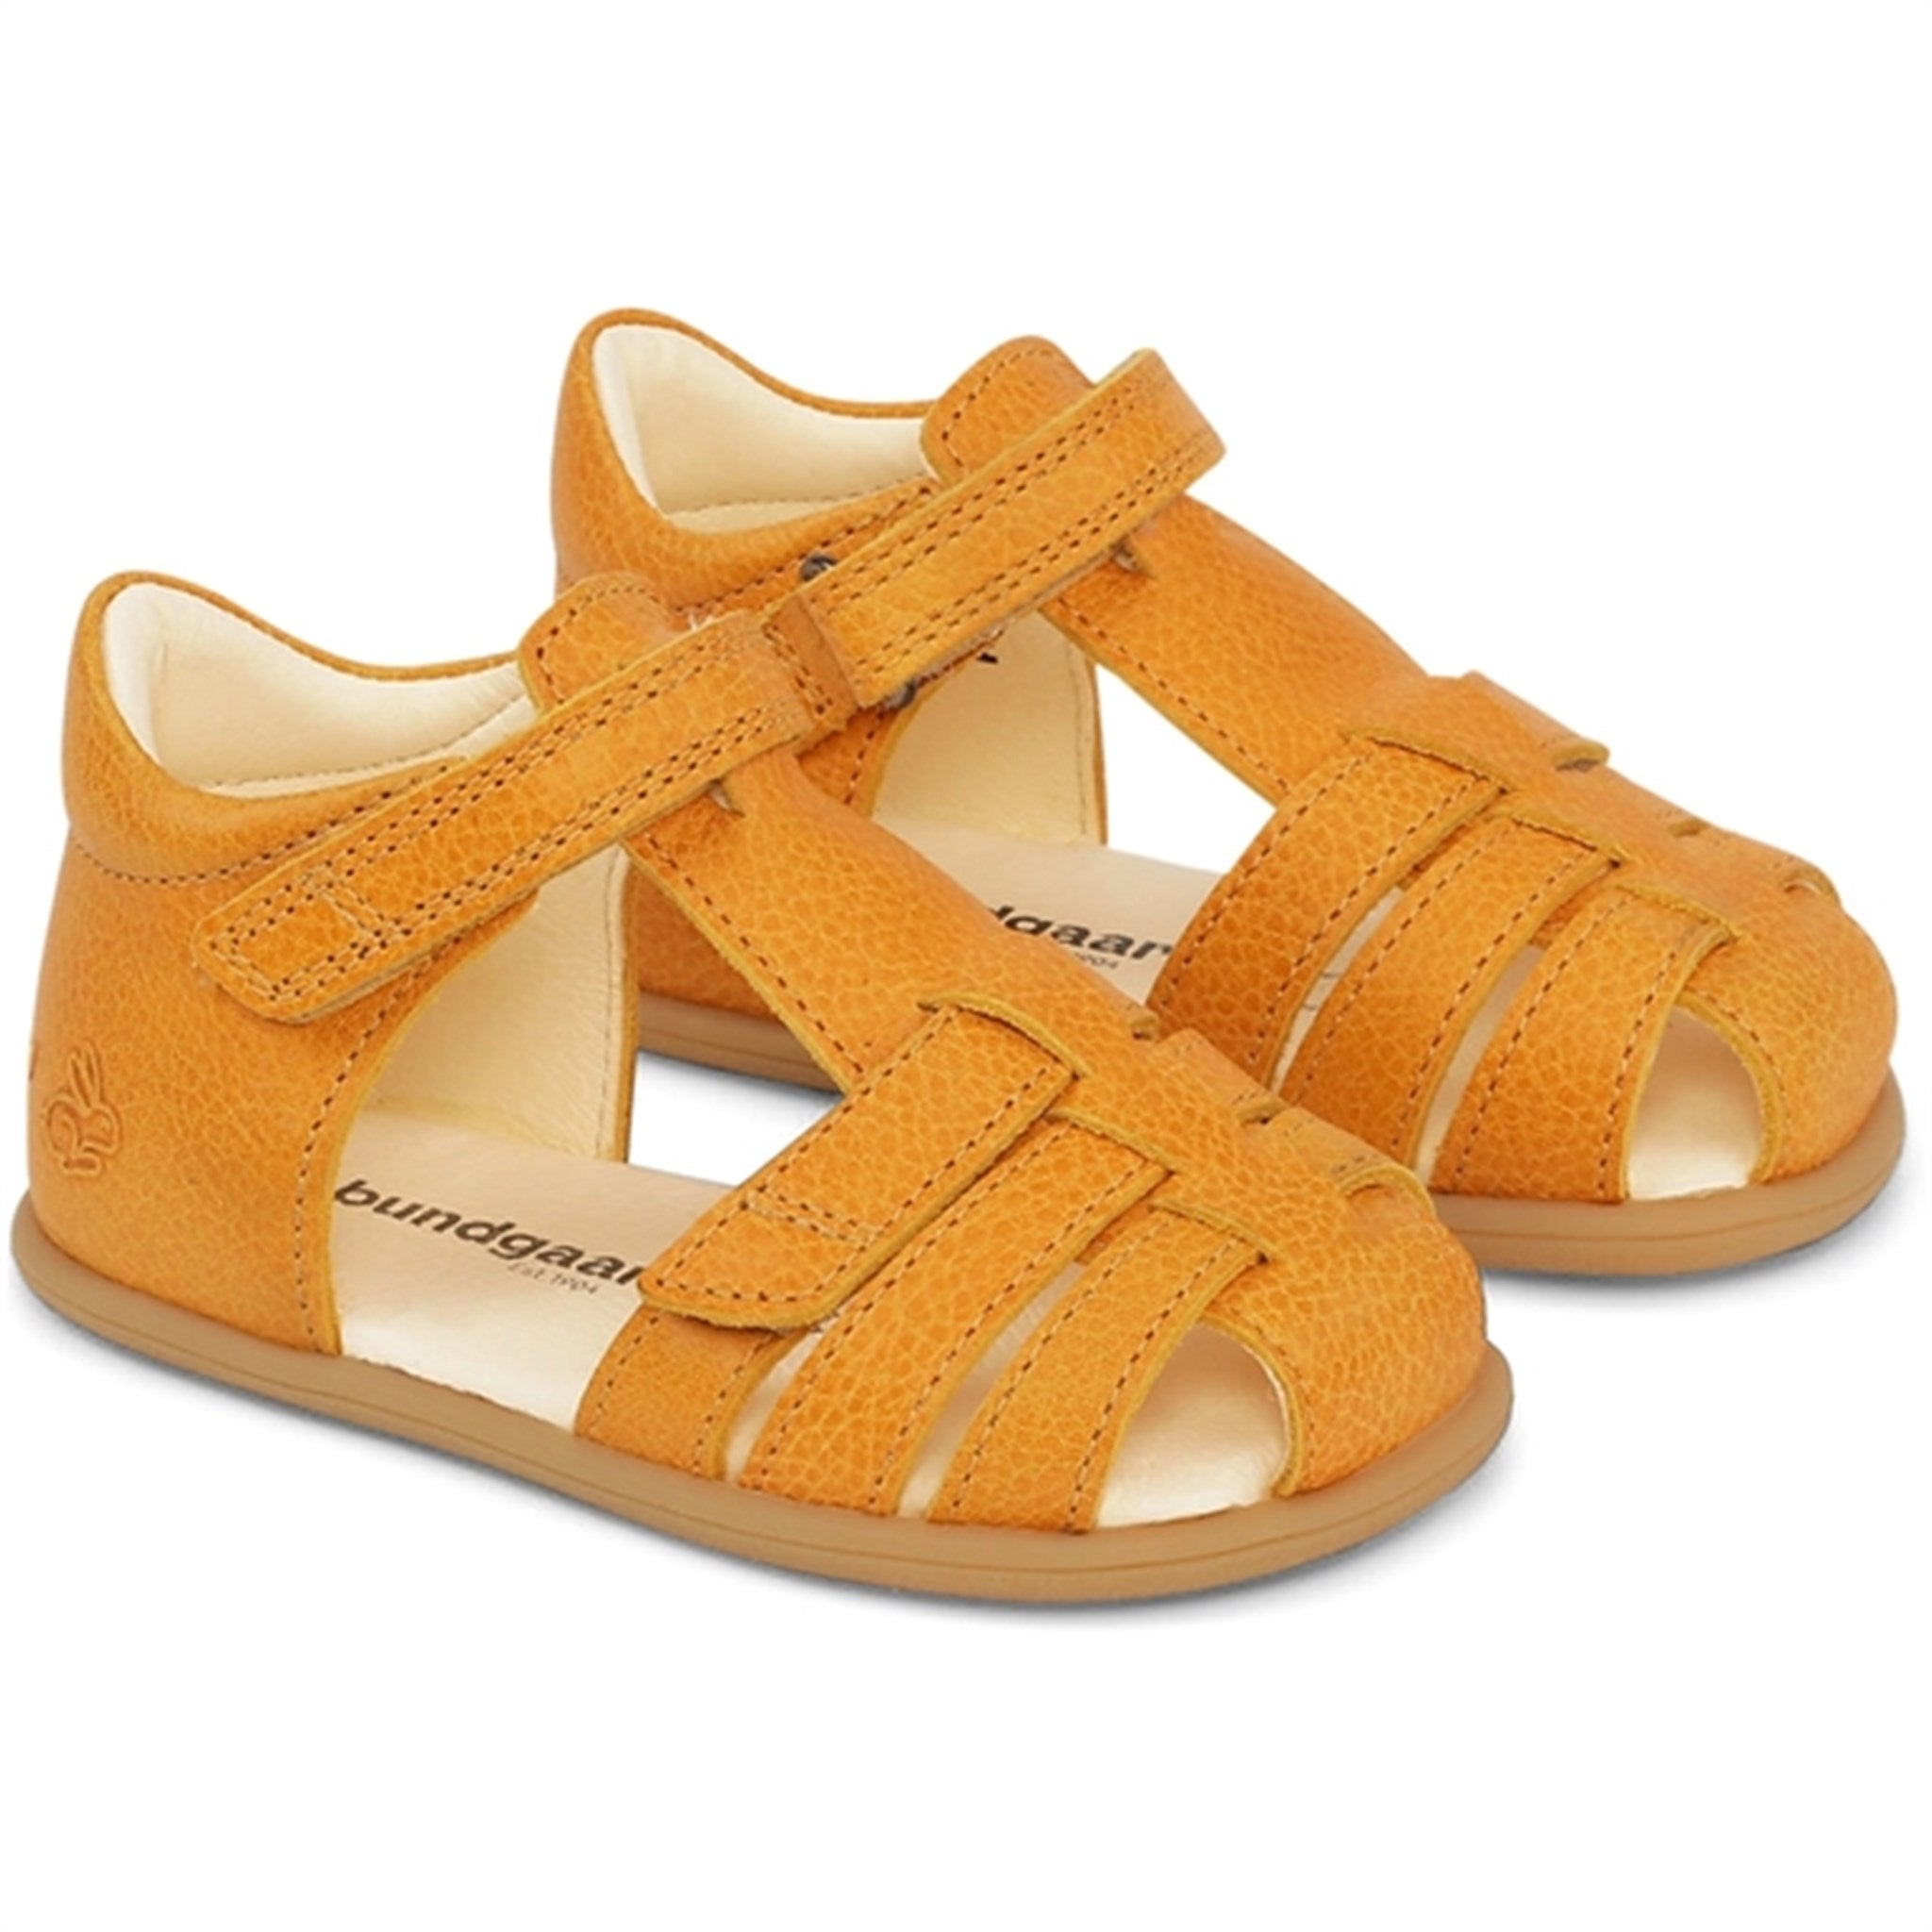 Bundgaard Rox III Sandal Yellow G